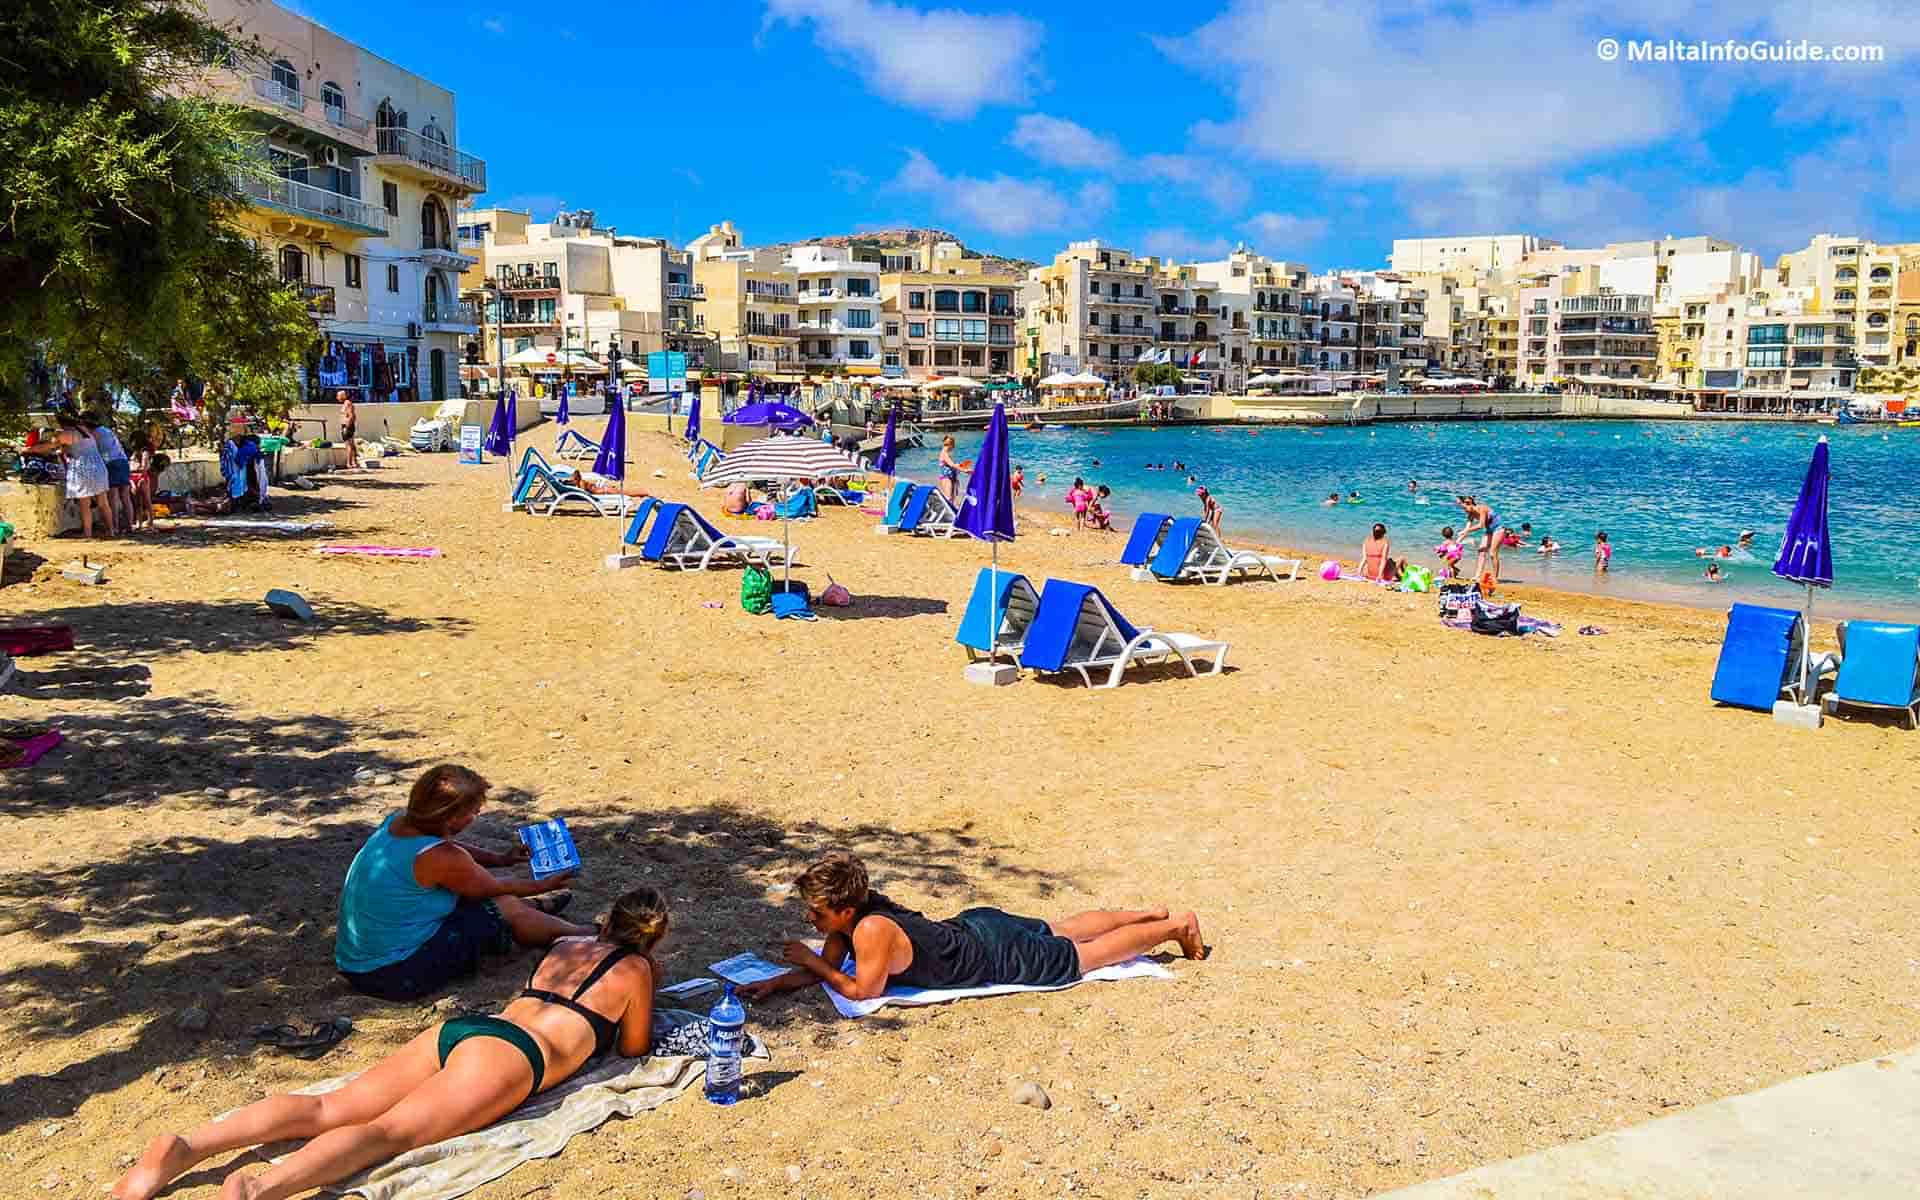 People sunbathing on Marsalforn Bay Malta.